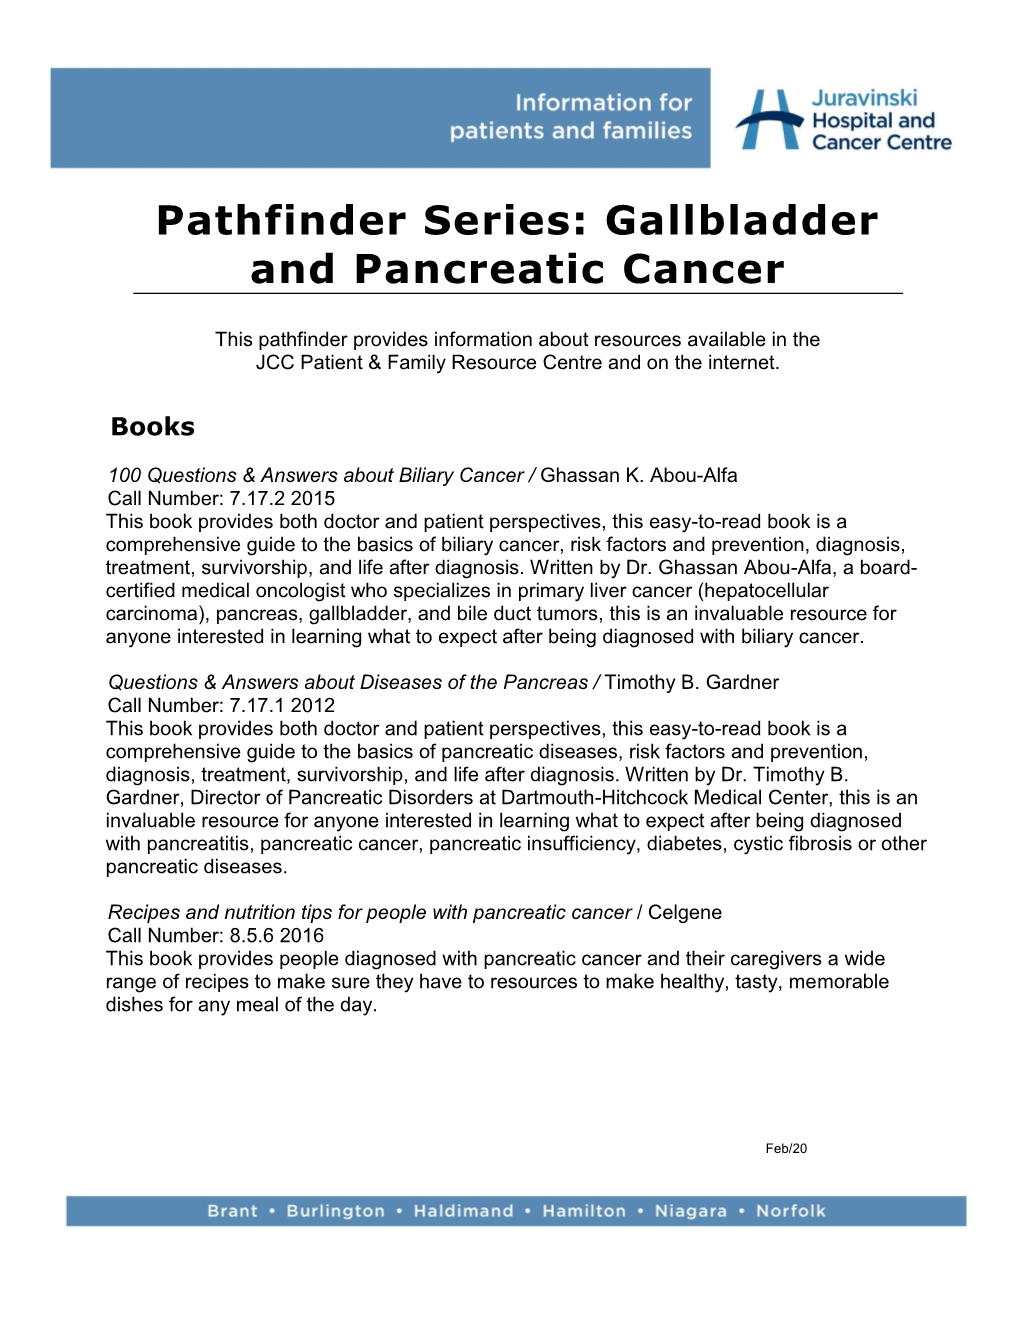 Pathfinder Series: Gallbladder and Pancreatic Cancer